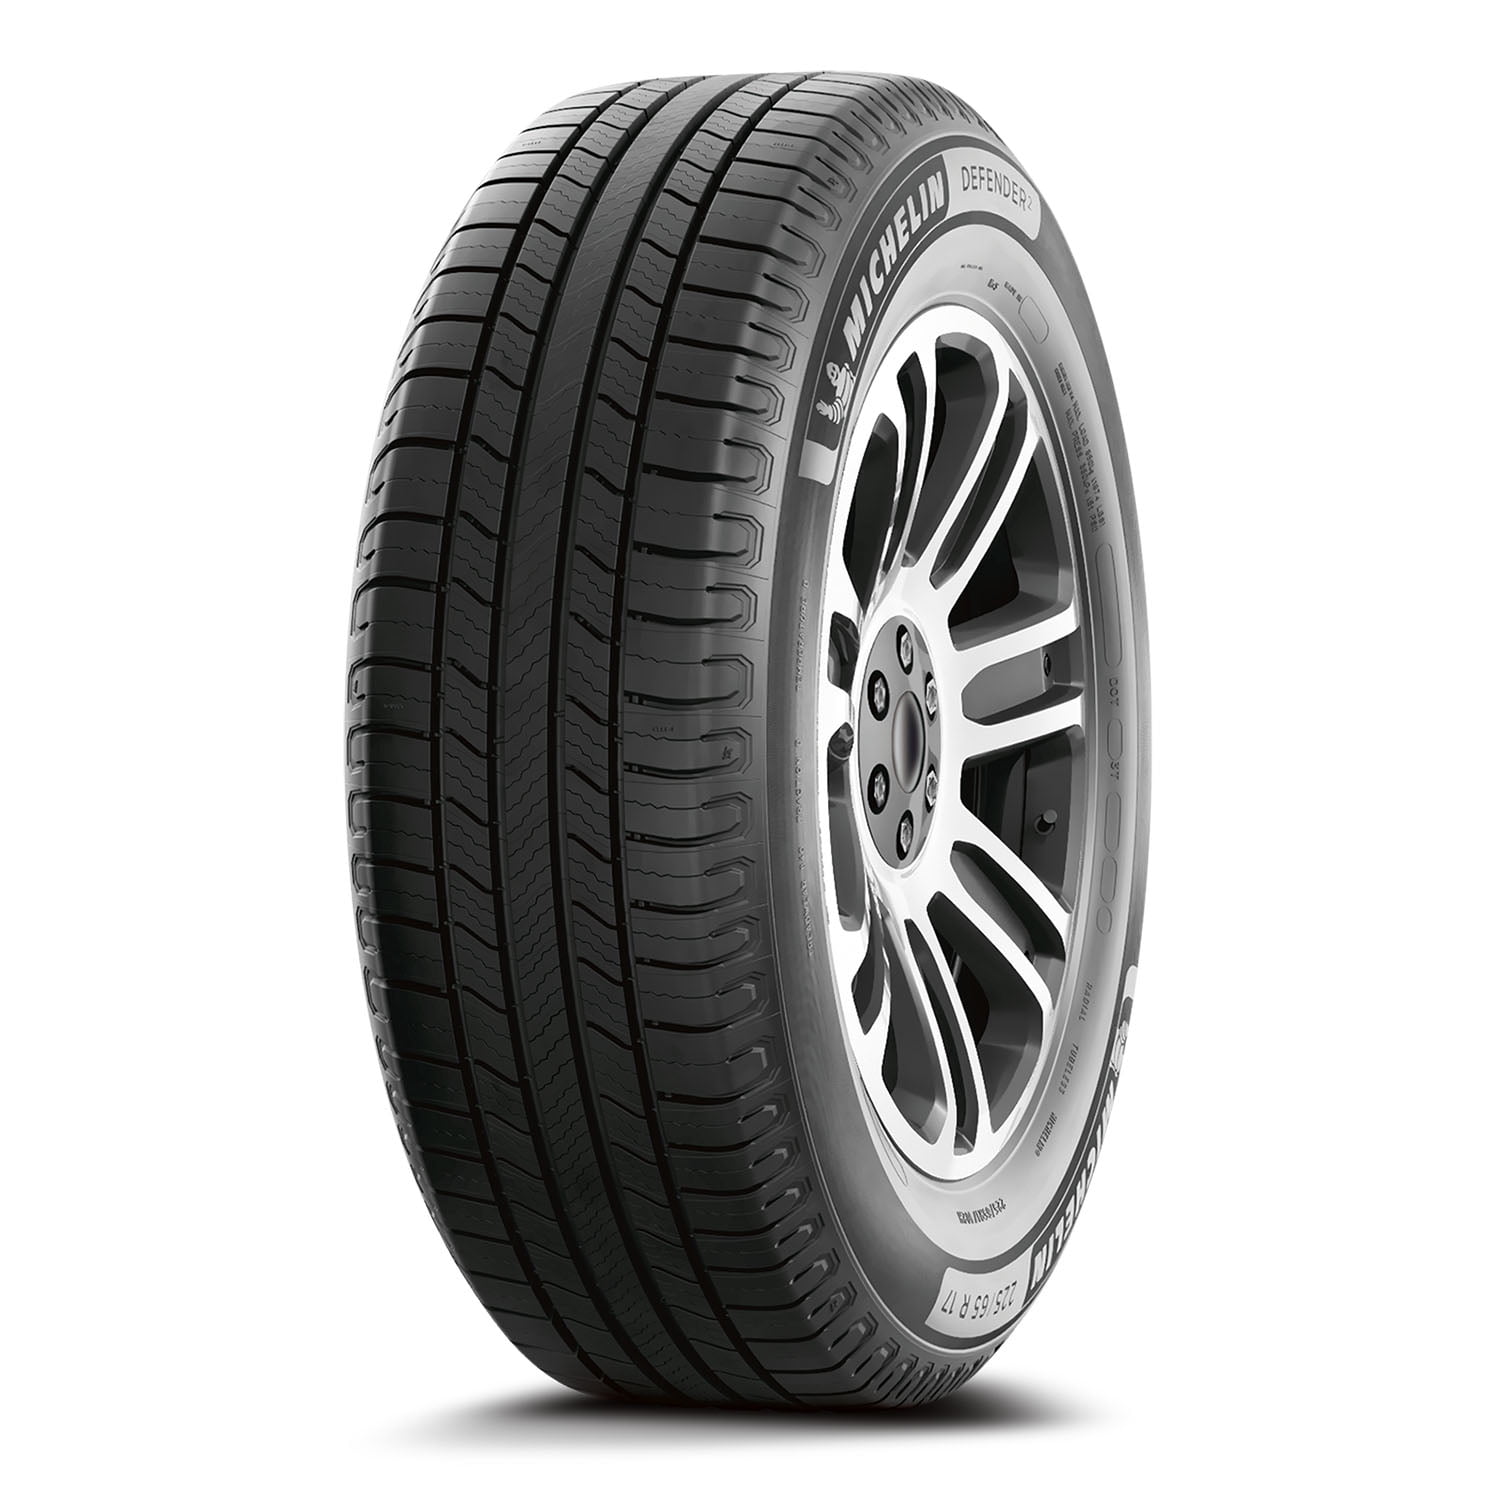 Michelin Defender 2 All Season 225/60R17 99H Passenger Tire